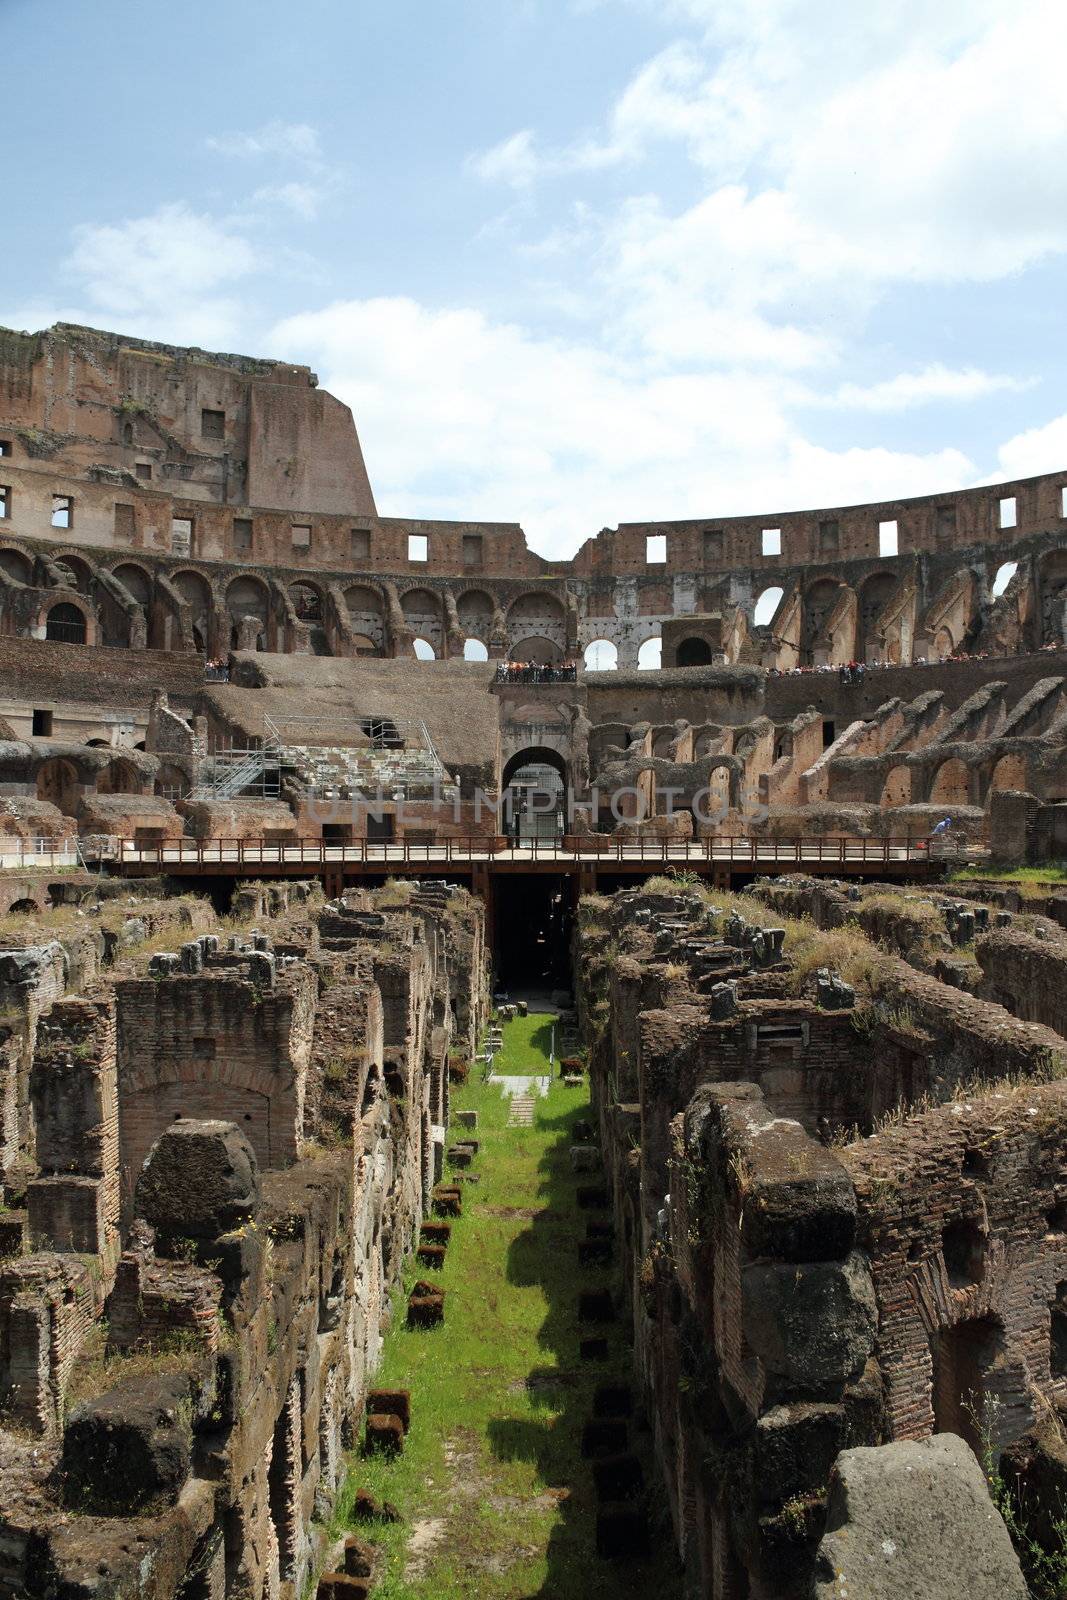 Inside the Roman Coliseum by jasony00